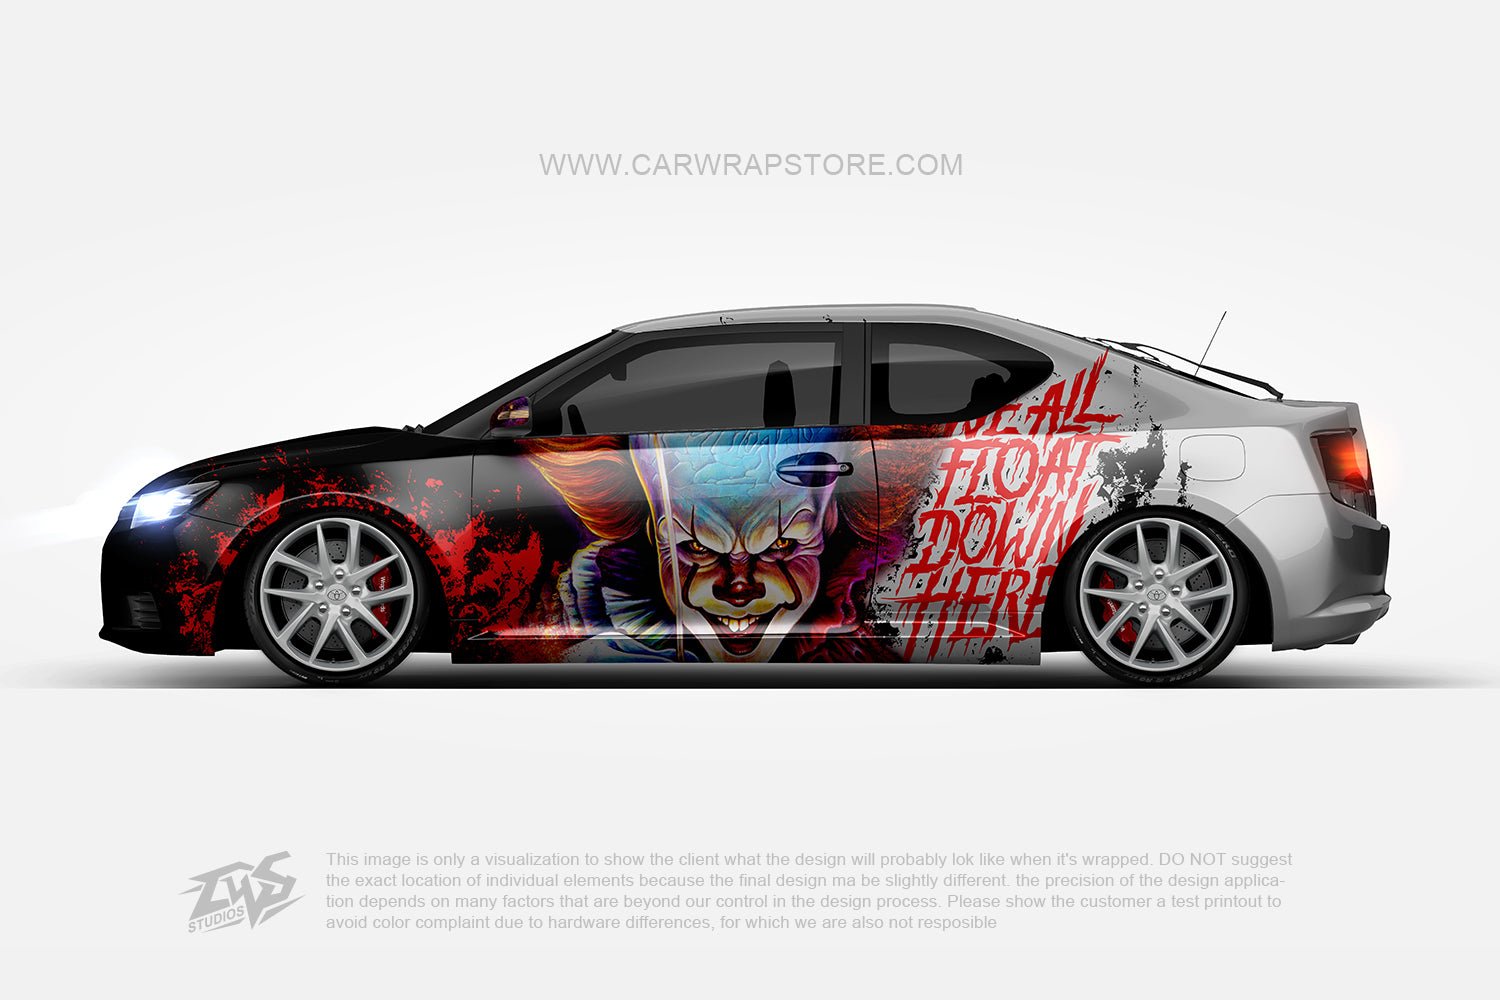 Deadpool ITASHA anime car wrap vinyl stickers Fit With Any Cars